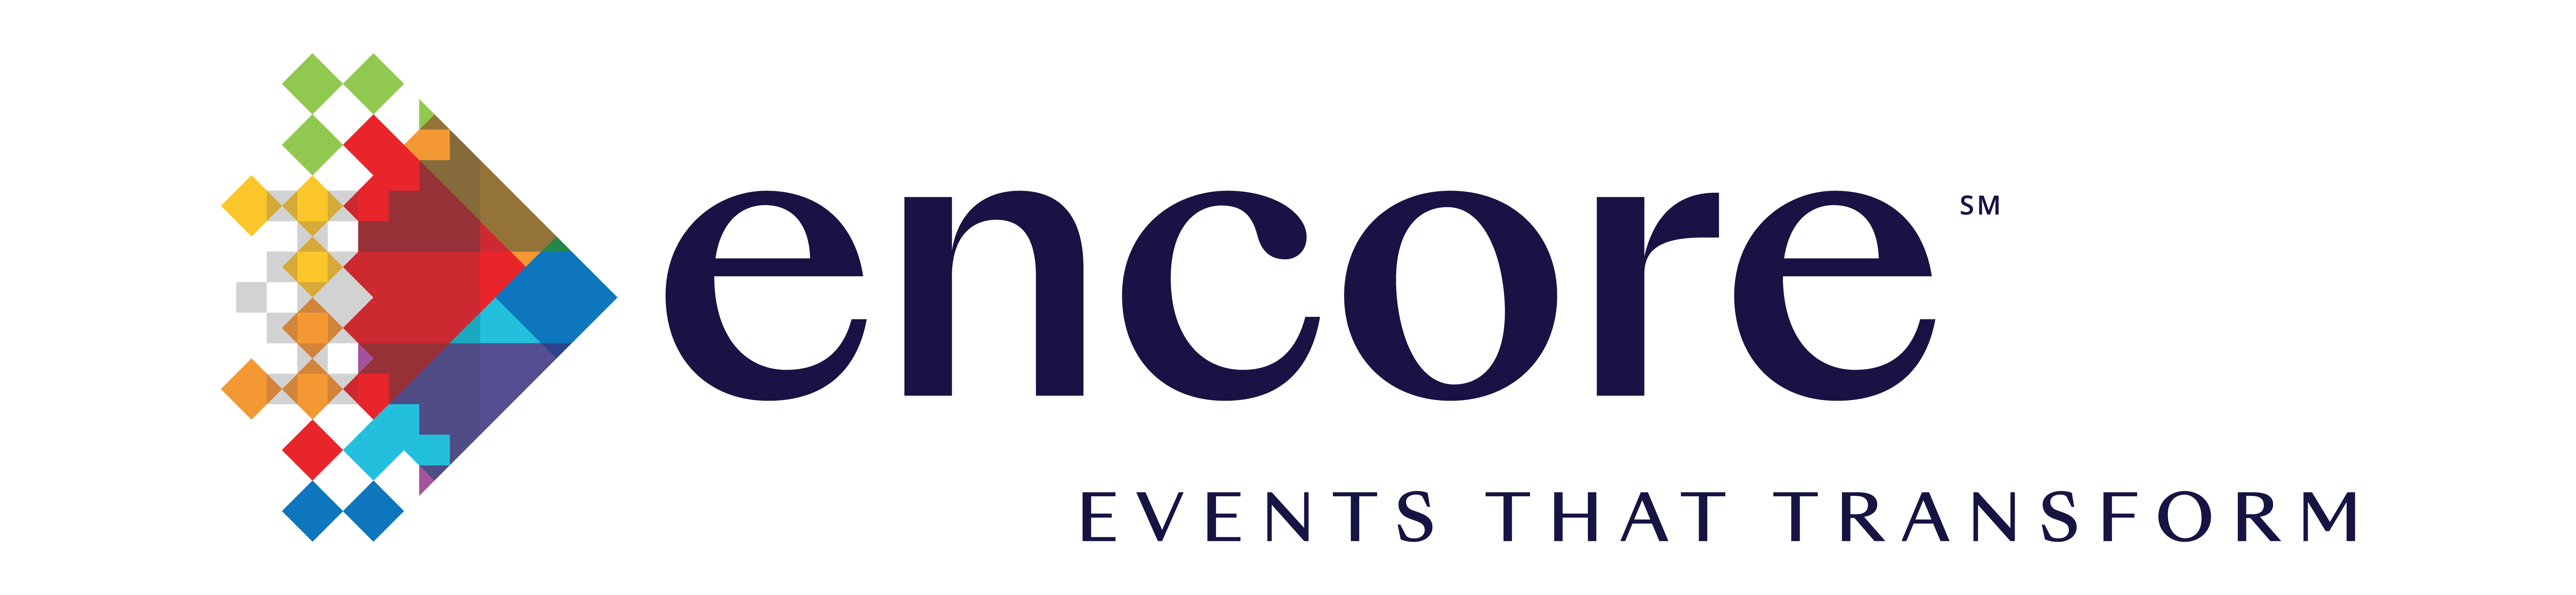 Encore Event Technologies Calgary